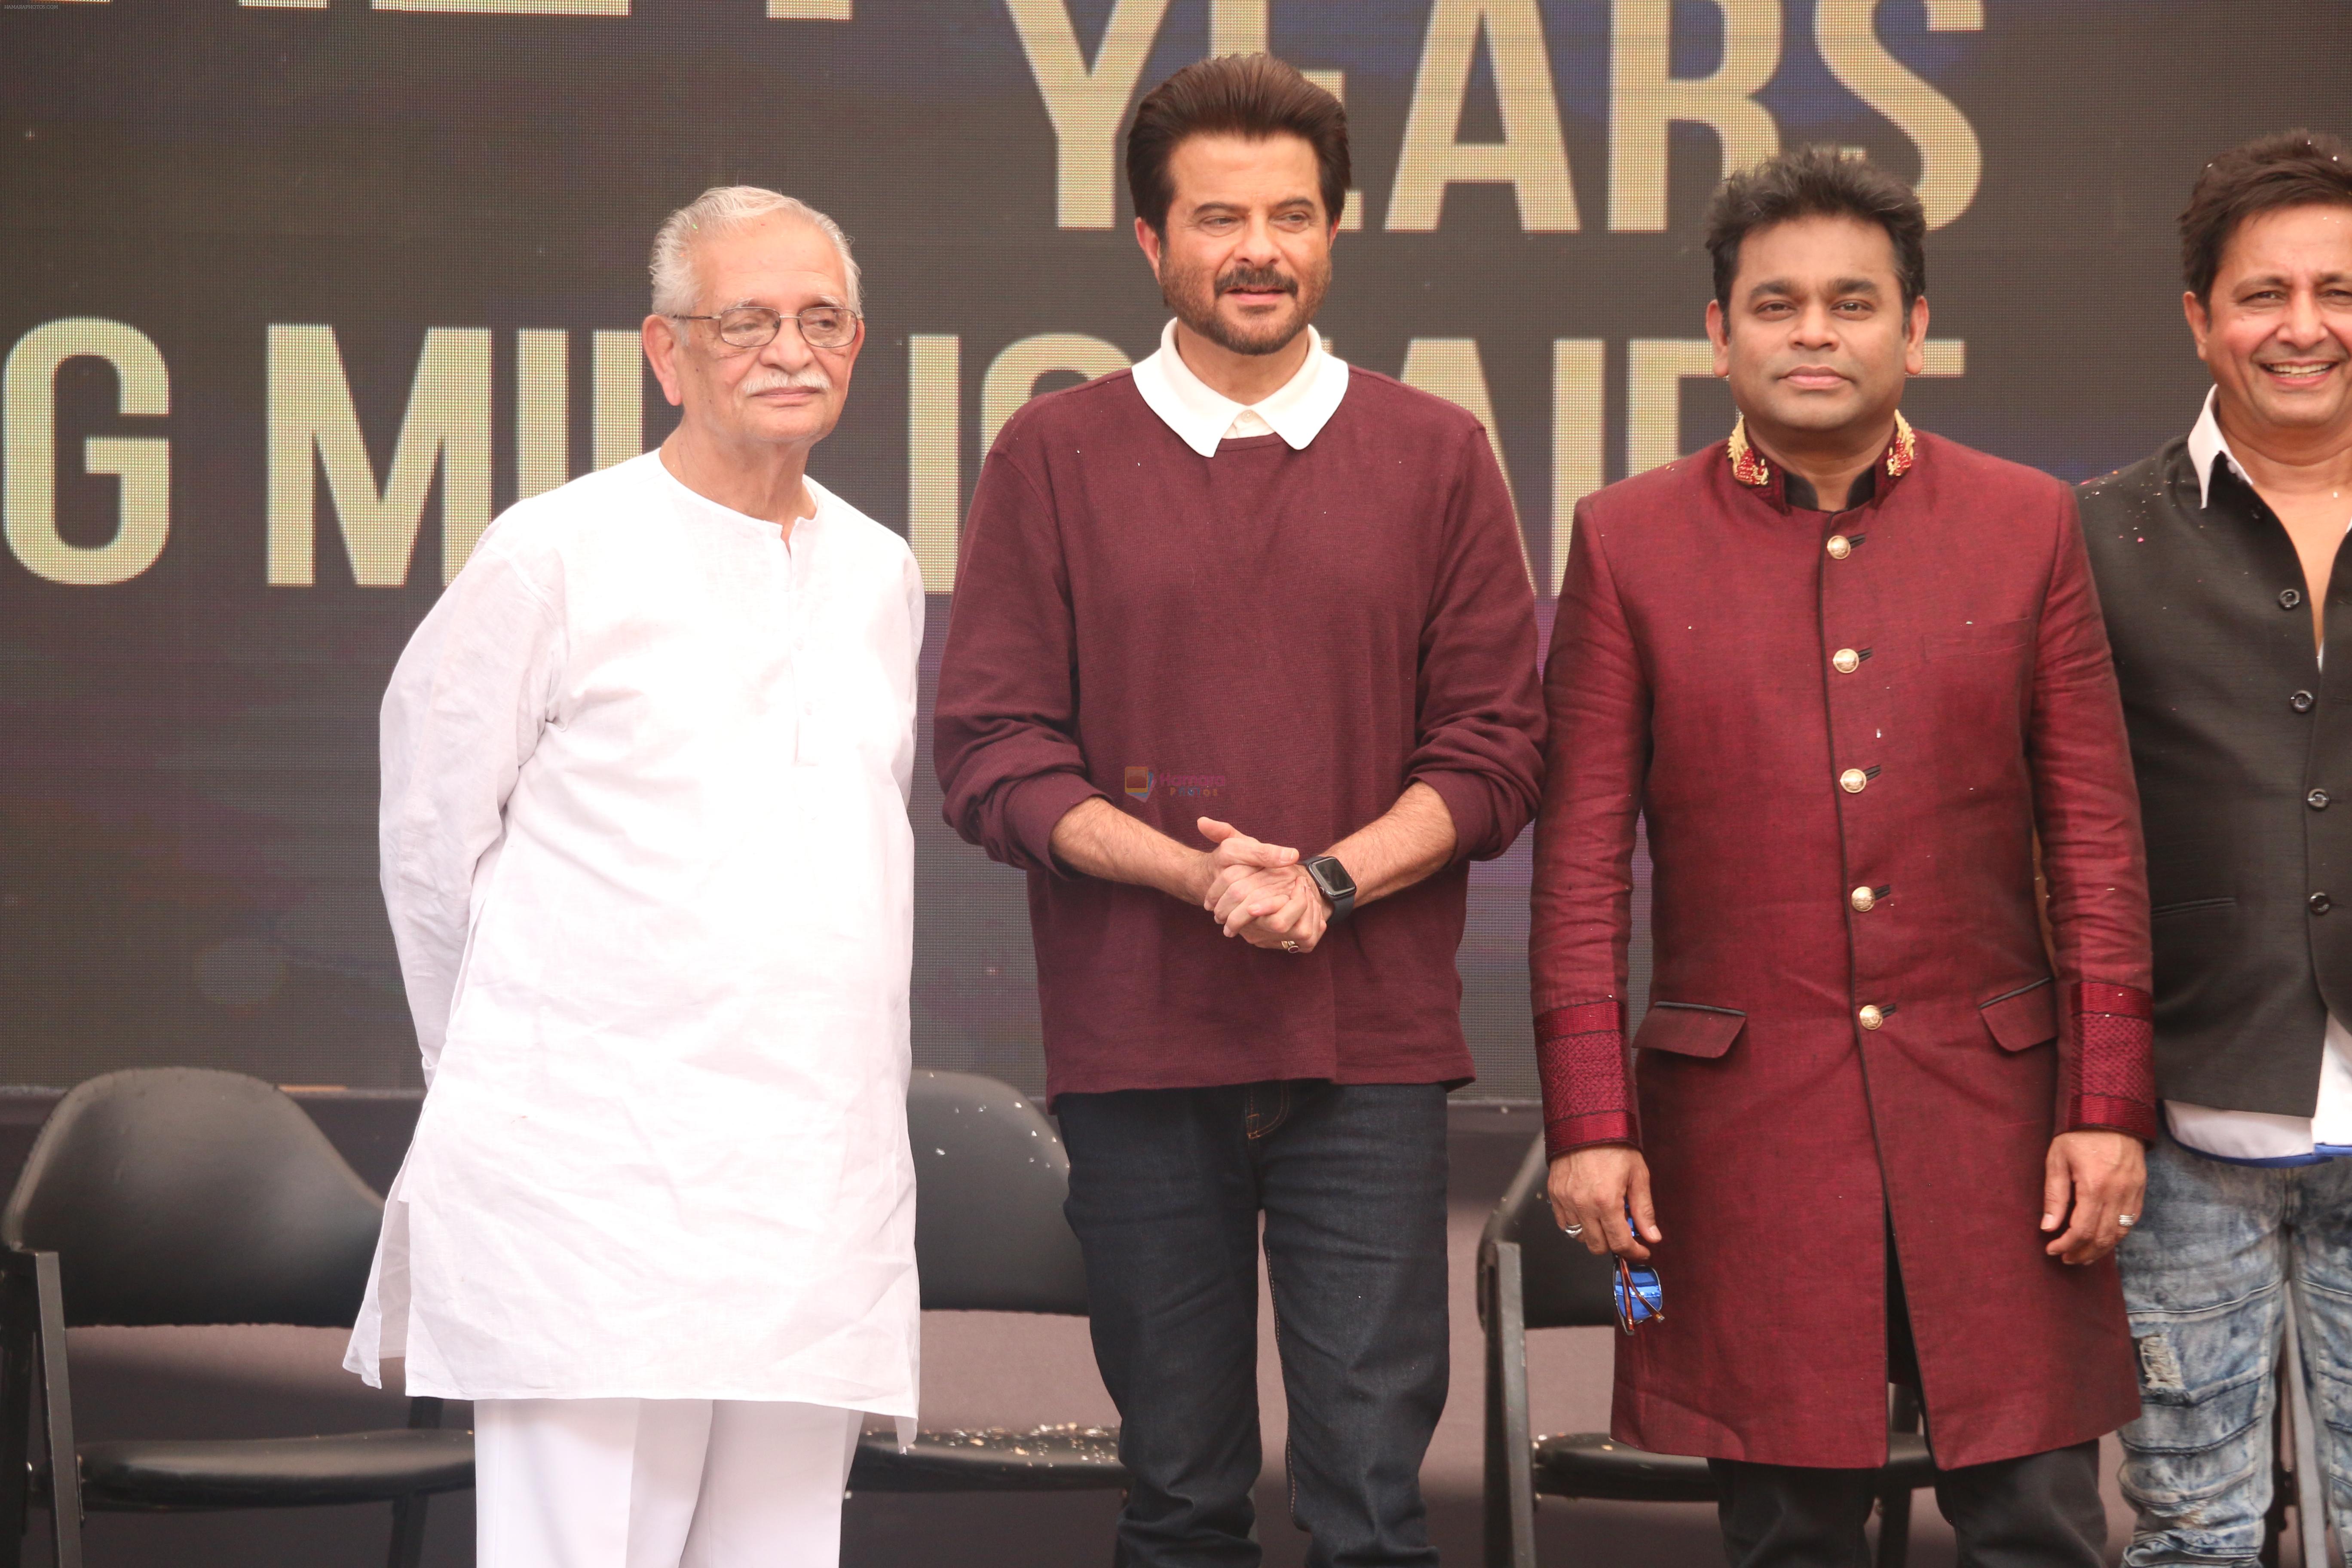 Anil Kapoor, AR Rahman, Gulzar at the 10years celebration of Slumdog Millionaire in Dharavi on 4th Feb 2019